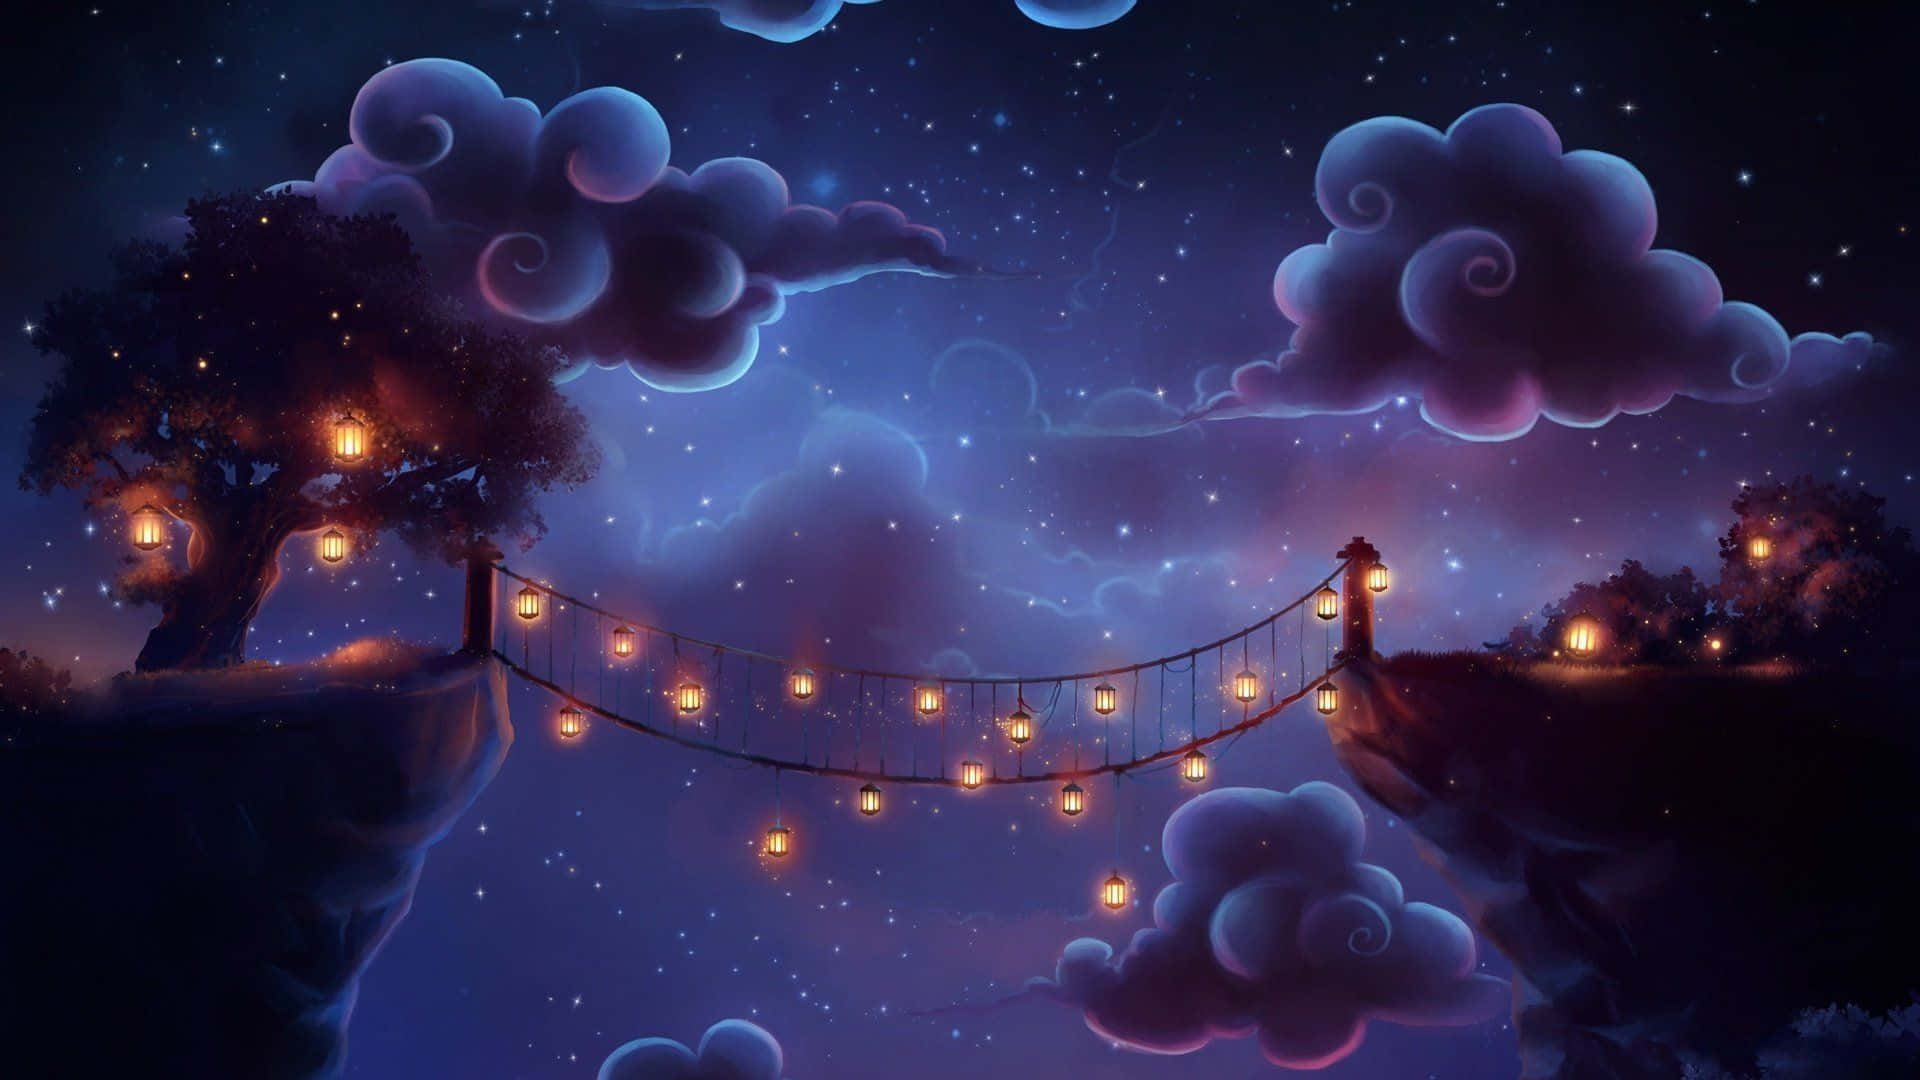 Beautiful Magical Night Sky With Many Lanterns On Bridge Background